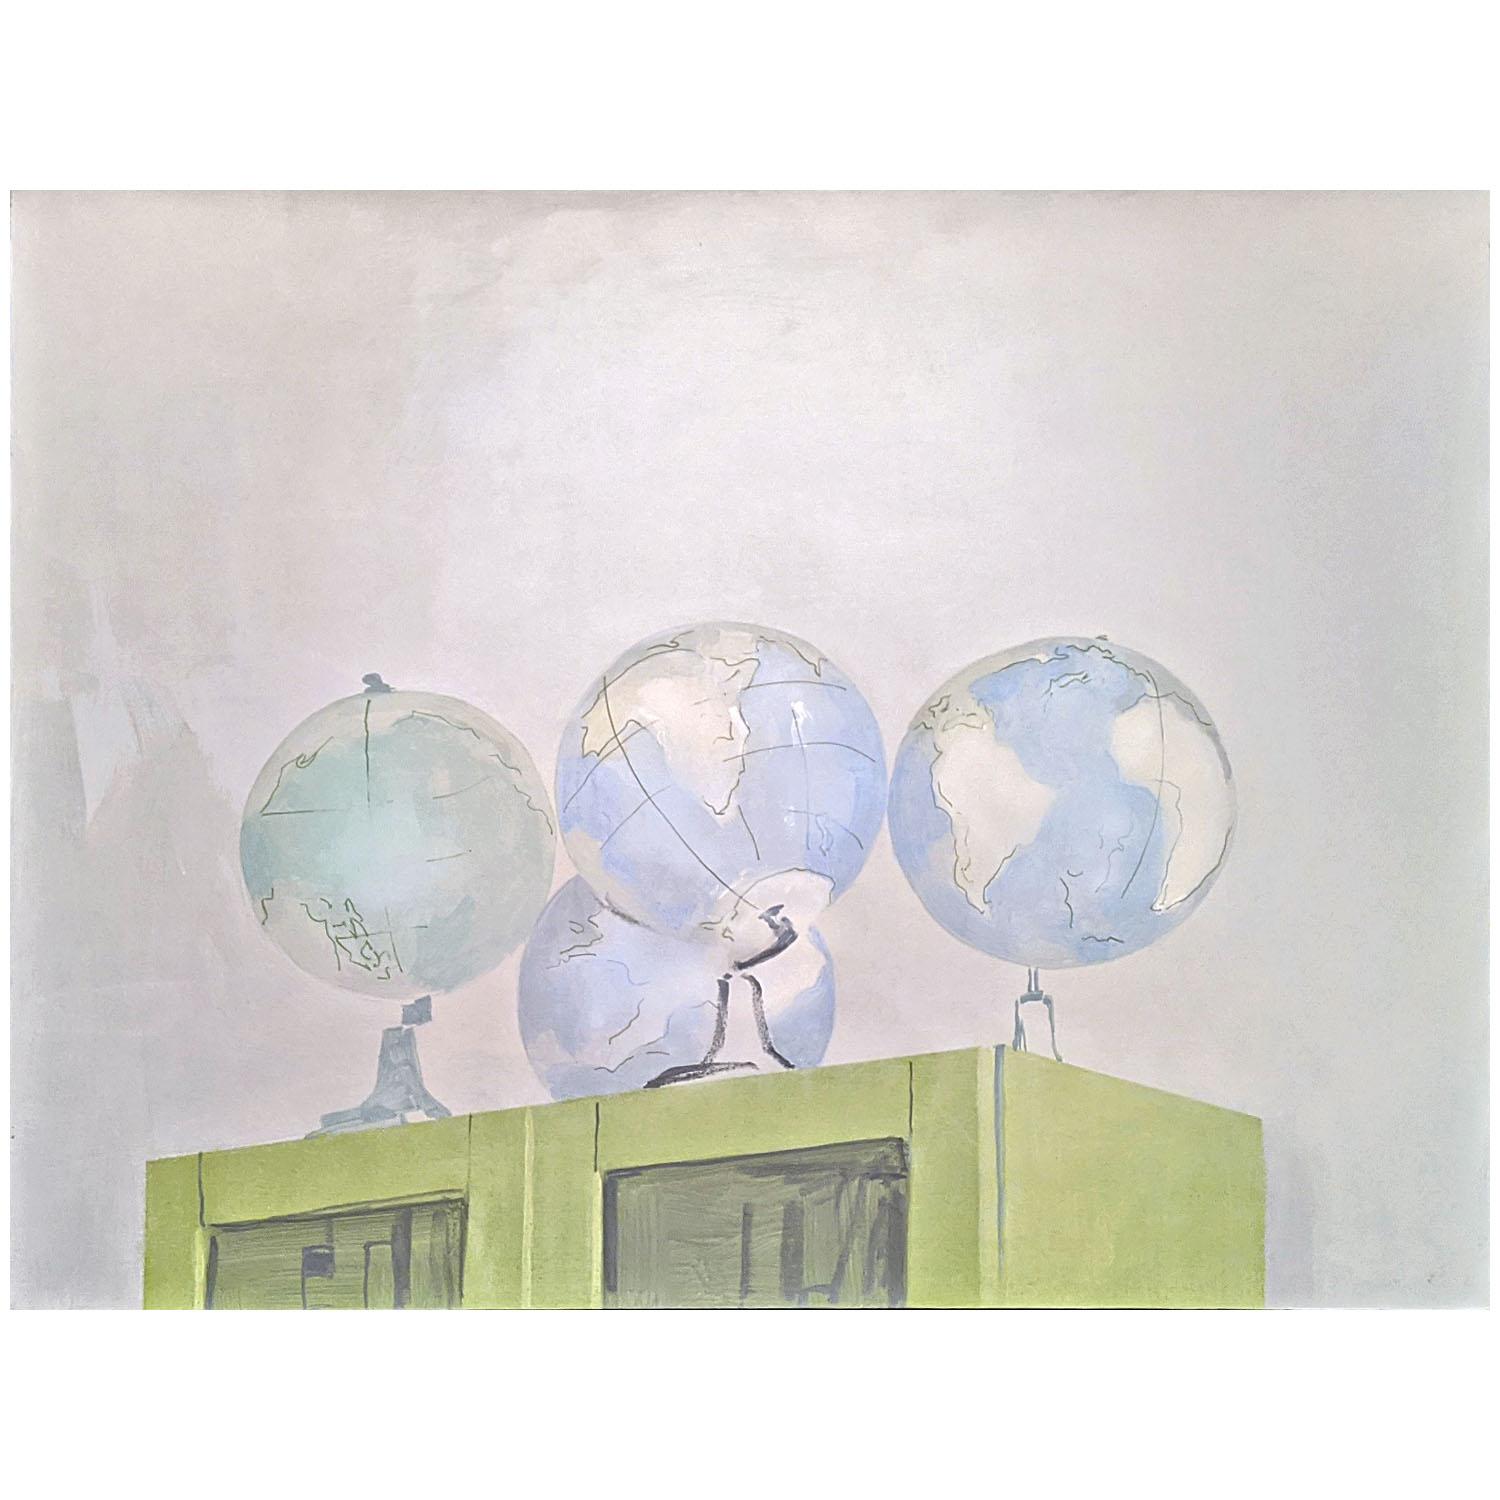 Александра Паперно. Натюрморт с глобусами. 2017